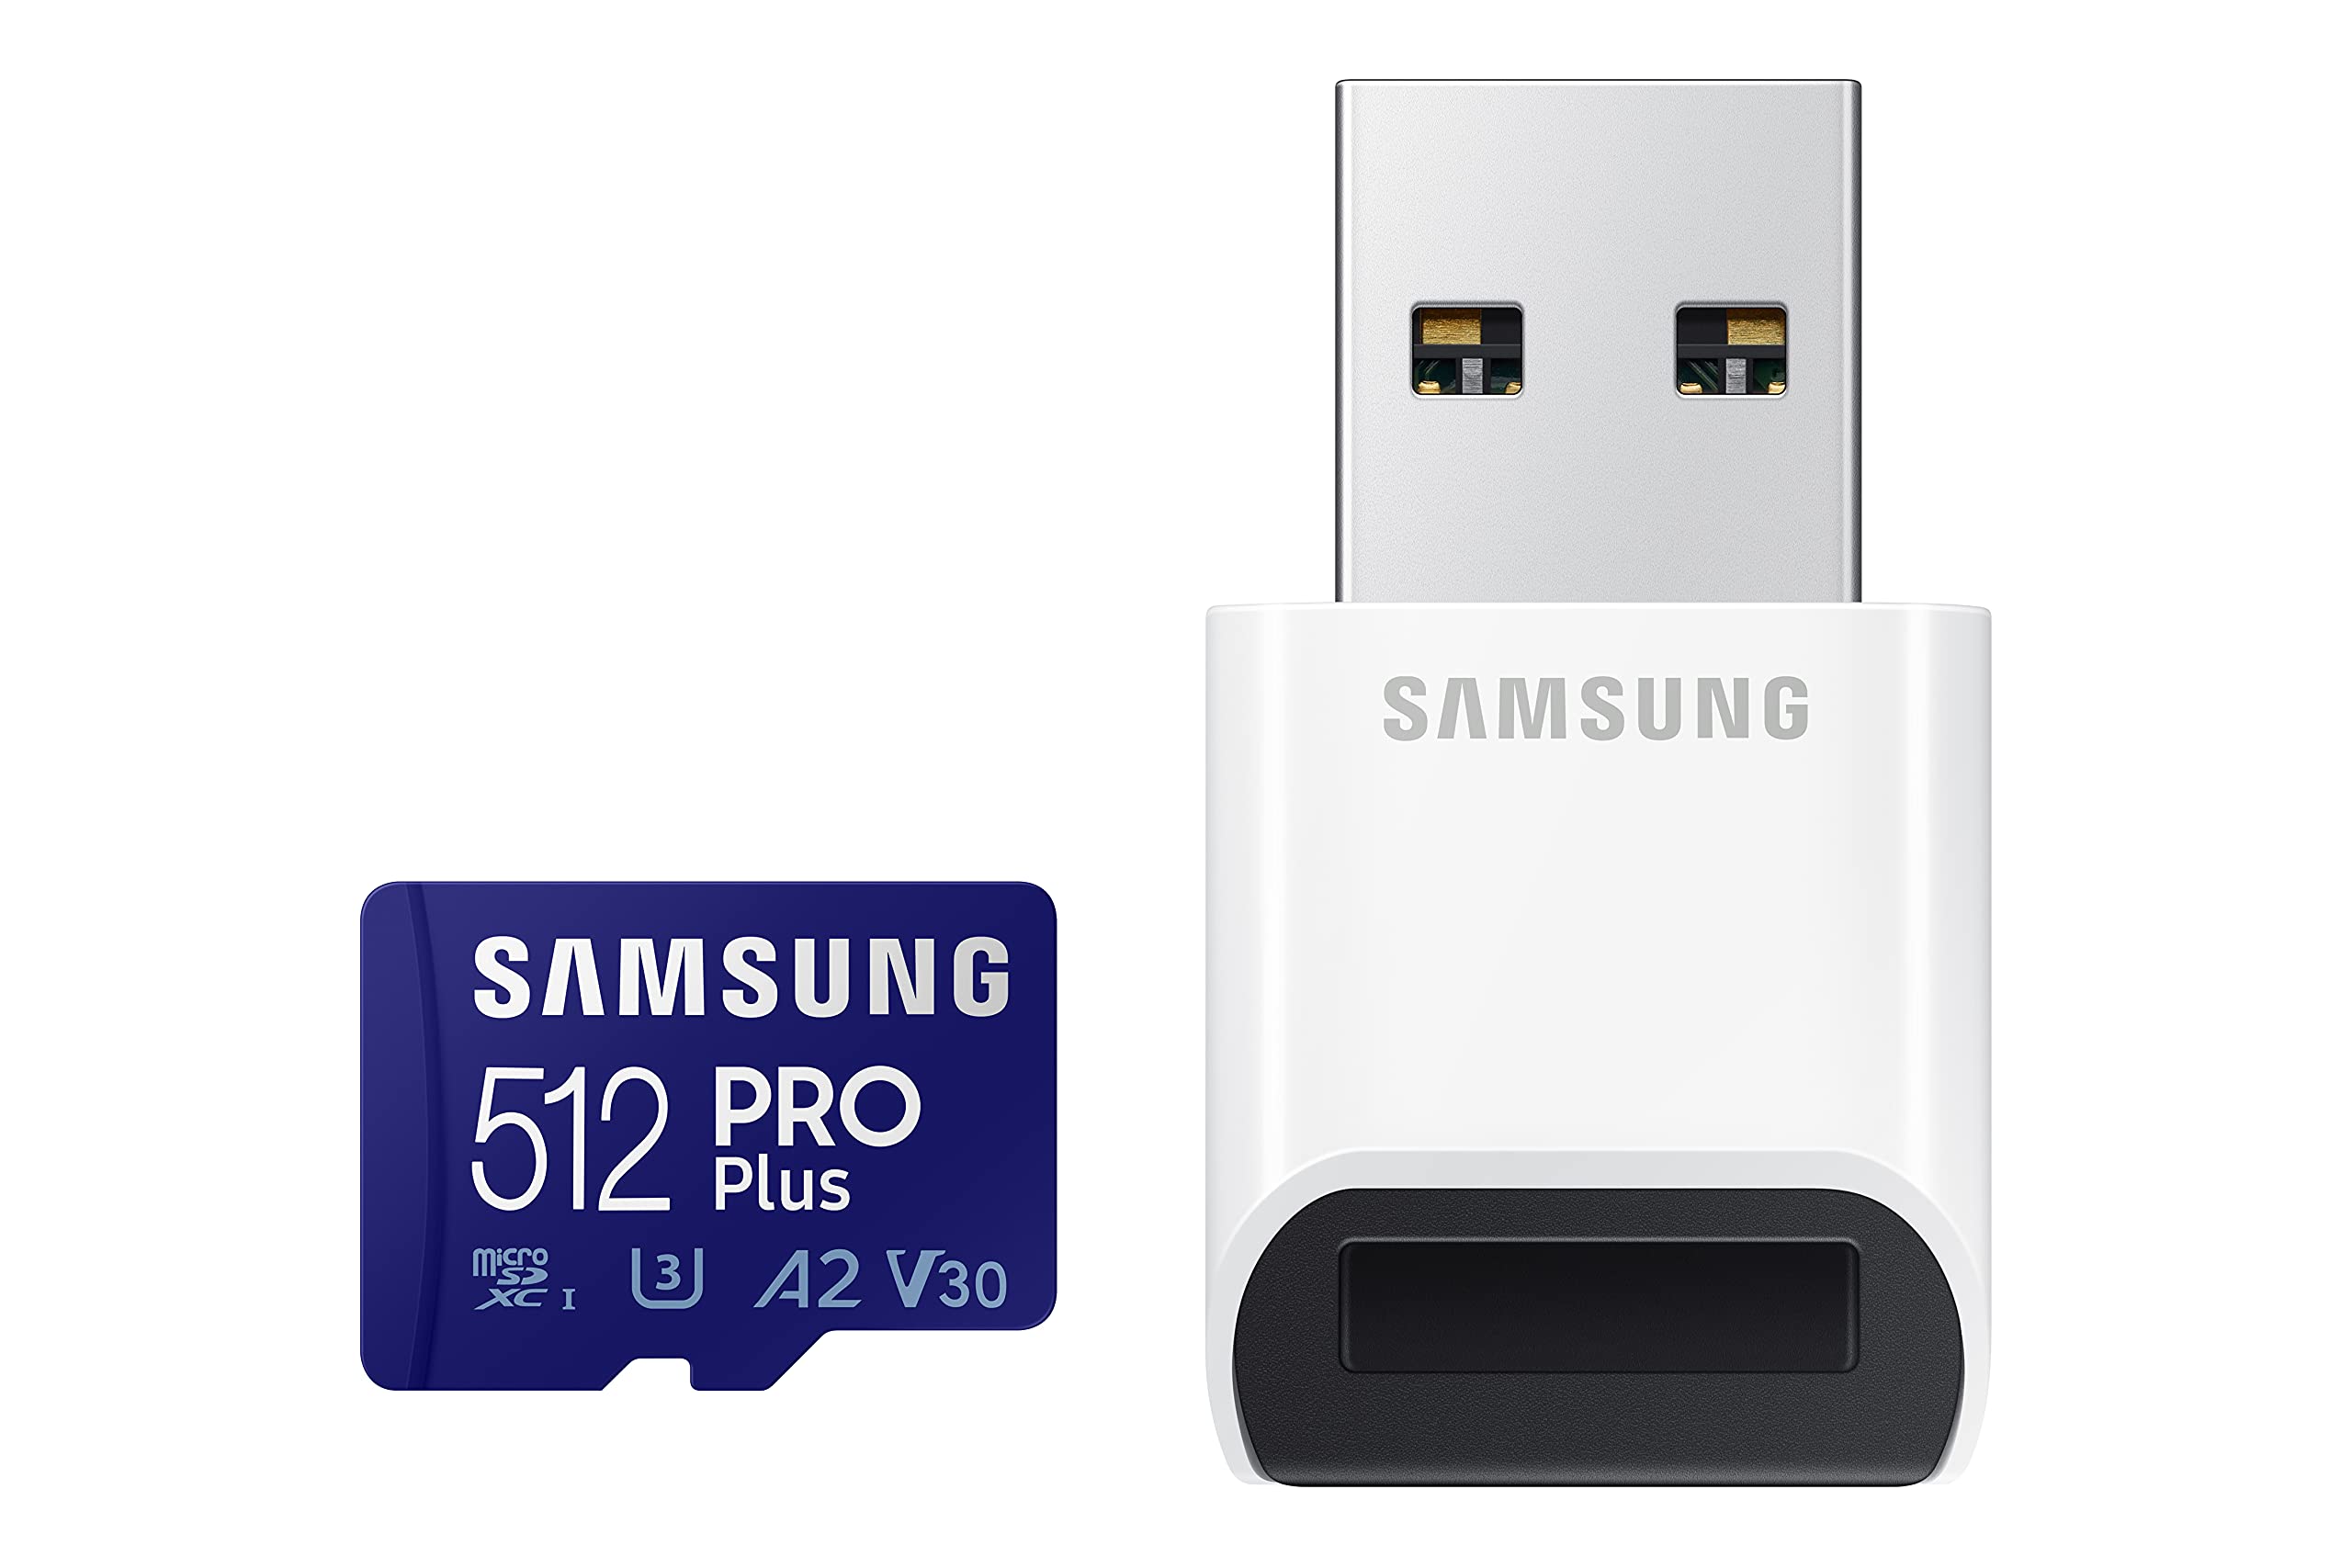 512GB SAMSUNG PRO Plus UHS-I U3 A2 V30 microSDXC Memory Card + USB Reader $36 + Free Shipping